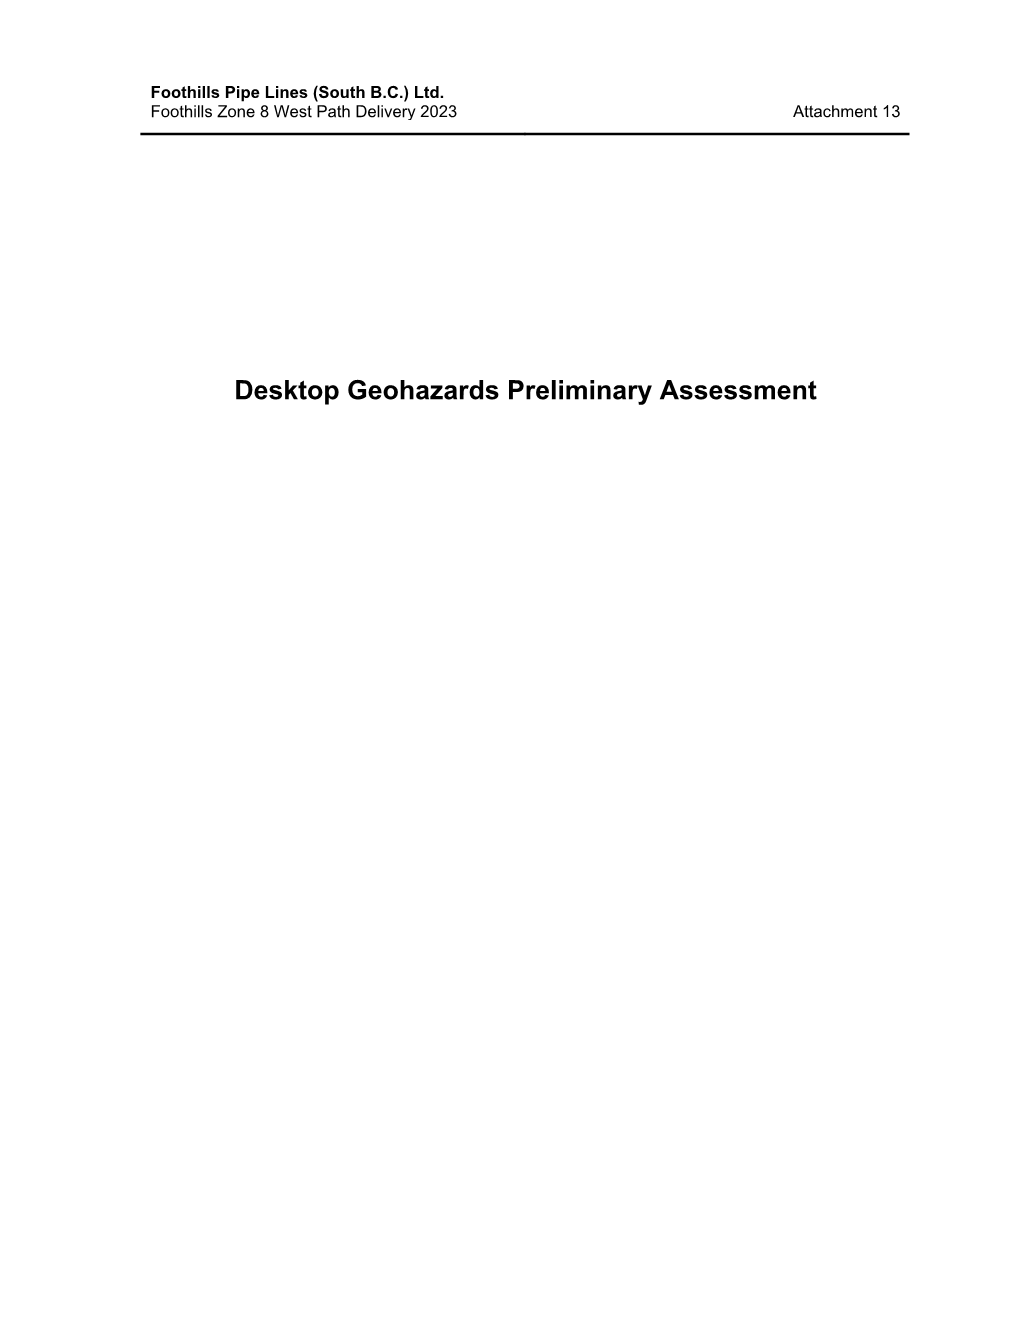 Desktop Geohazards Preliminary Assessment Attachment 13